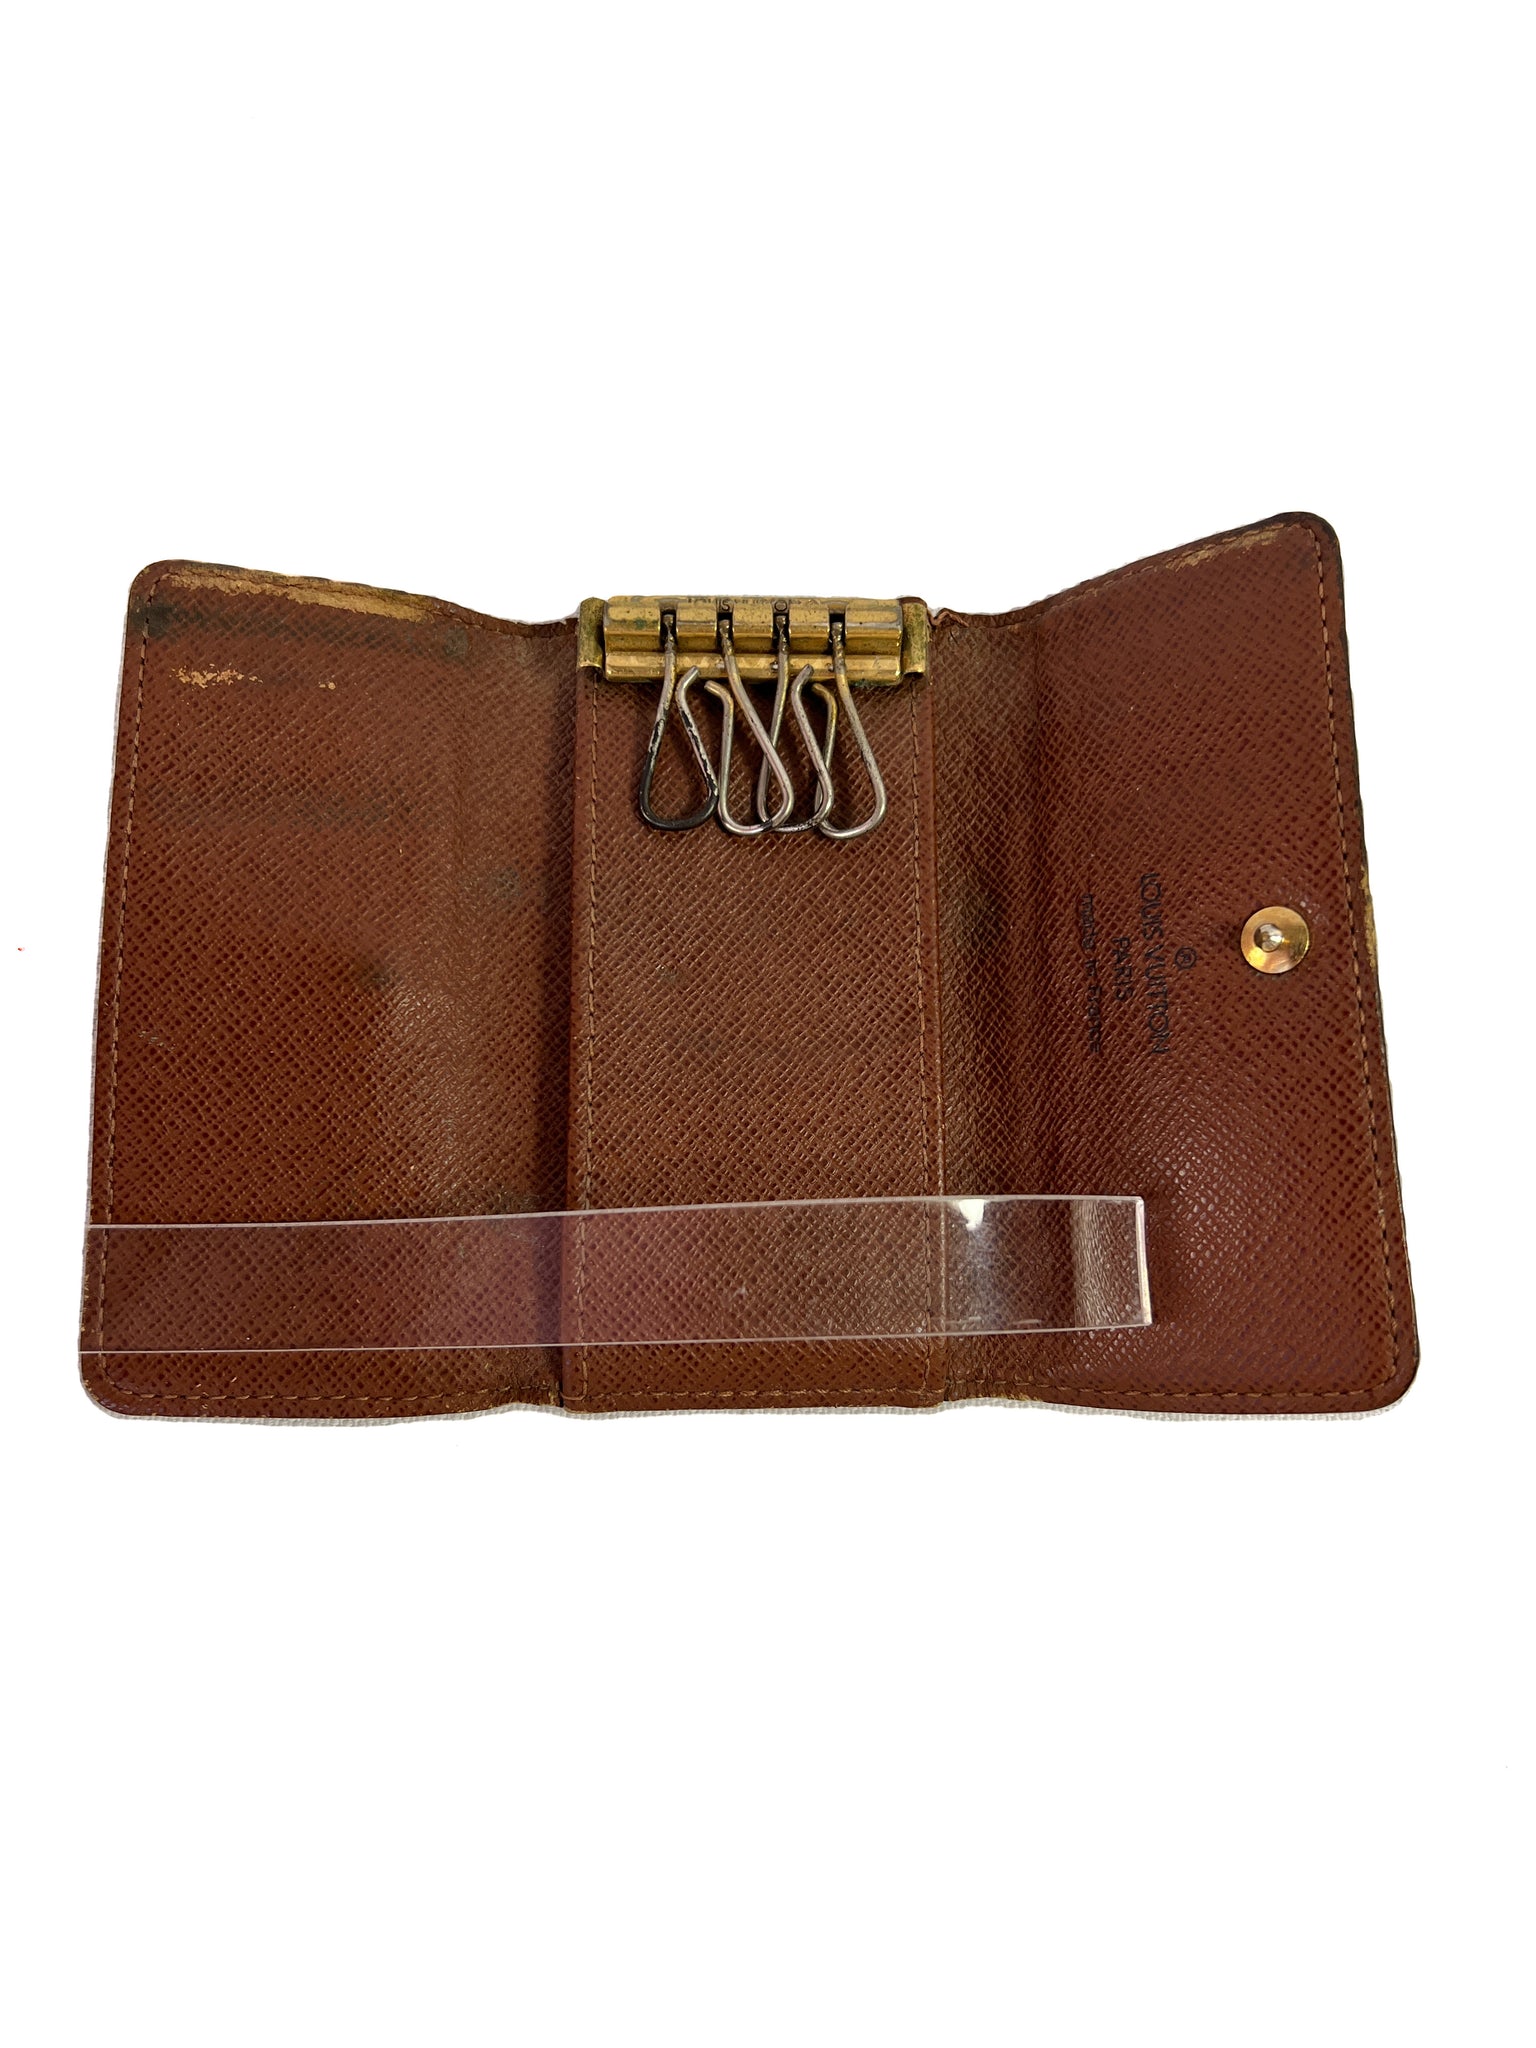 louis key wallet vintage